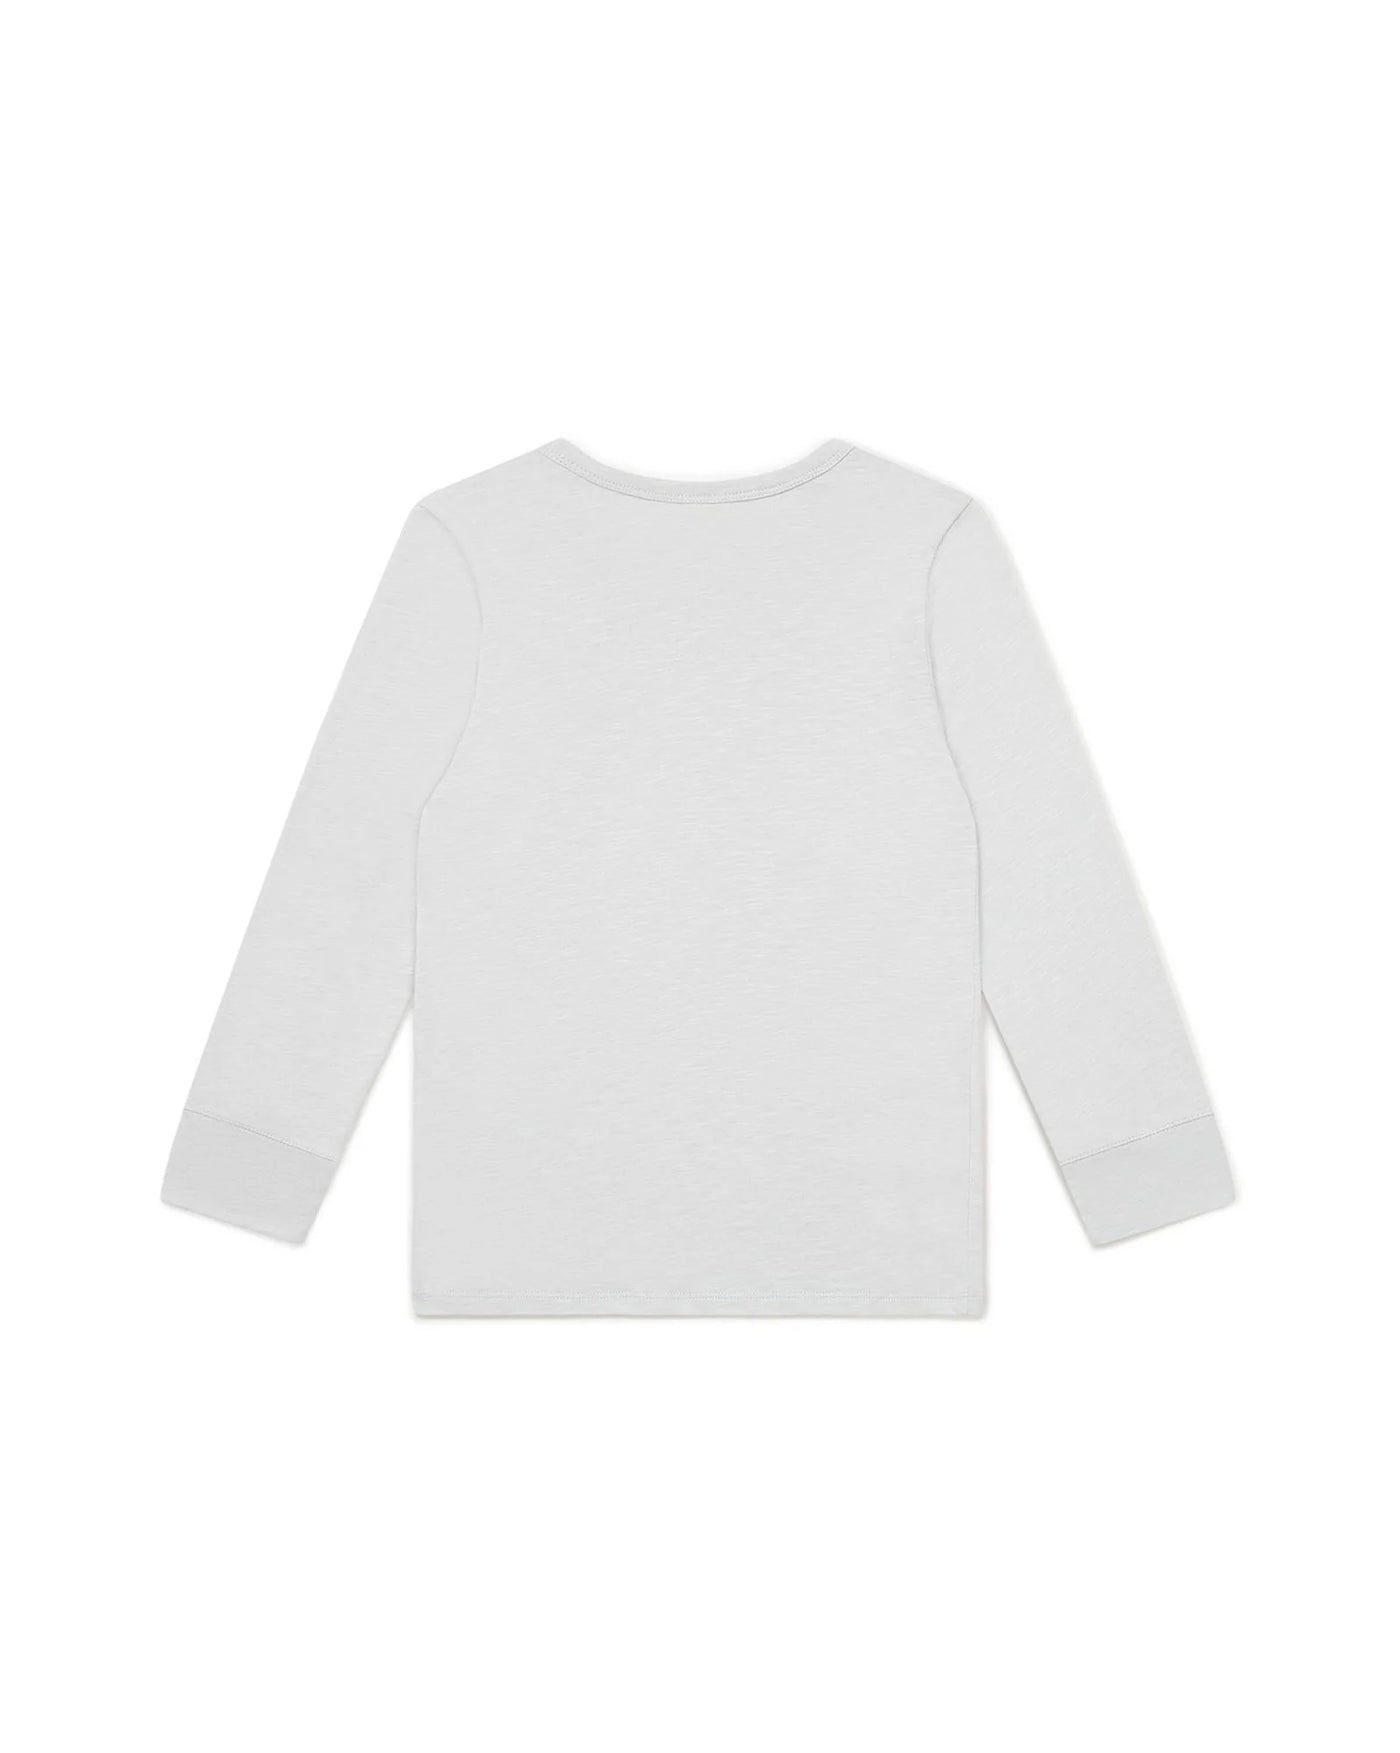 Long Sleeve Organic Cotton Tshirt in Gris Illusion